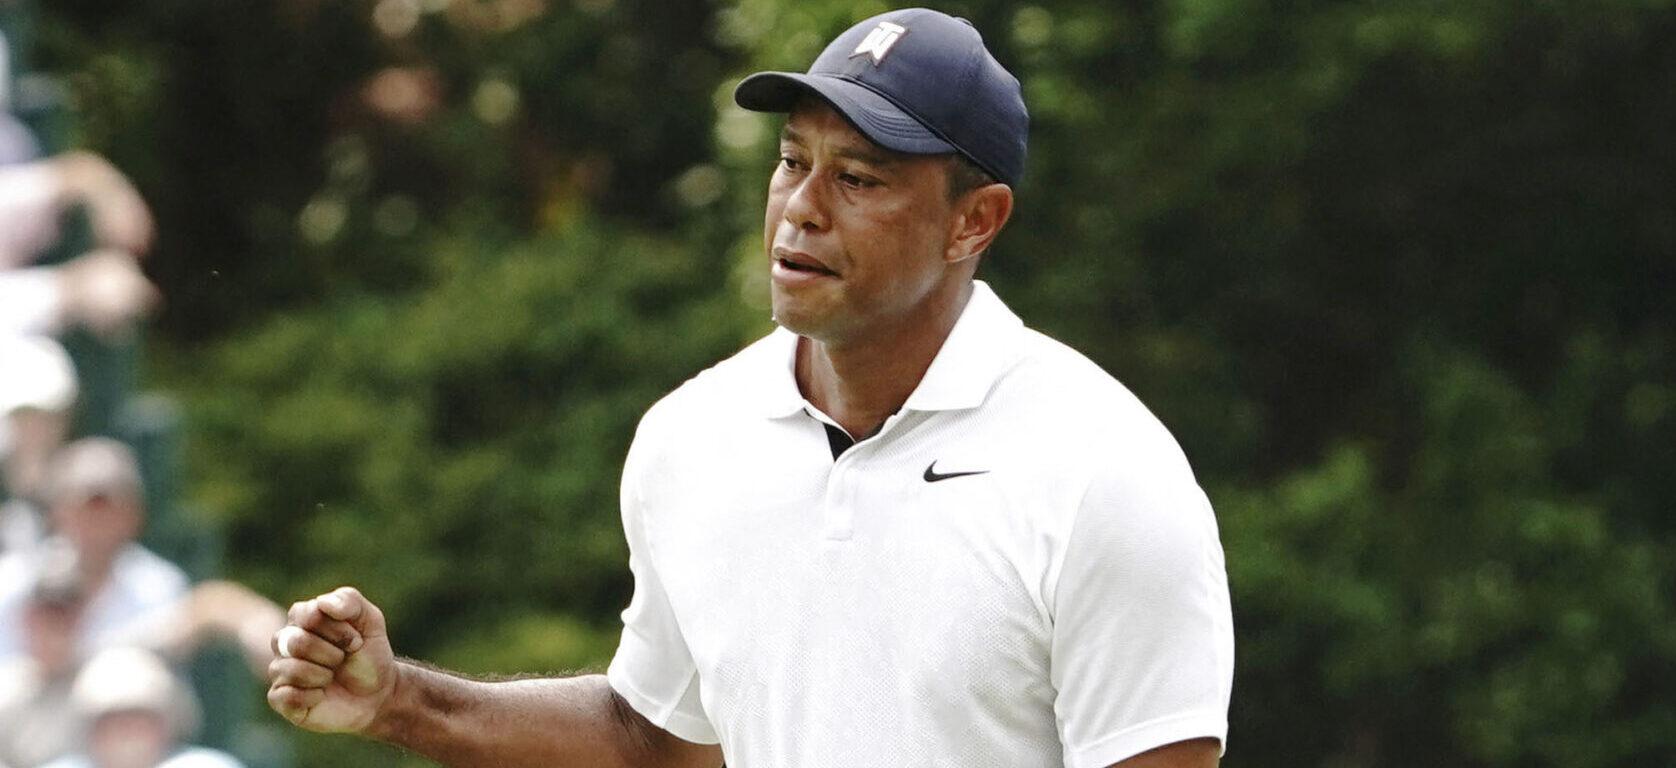 Tiger Woods Wins NDA Dispute With Ex-Girlfriend Erica Herman